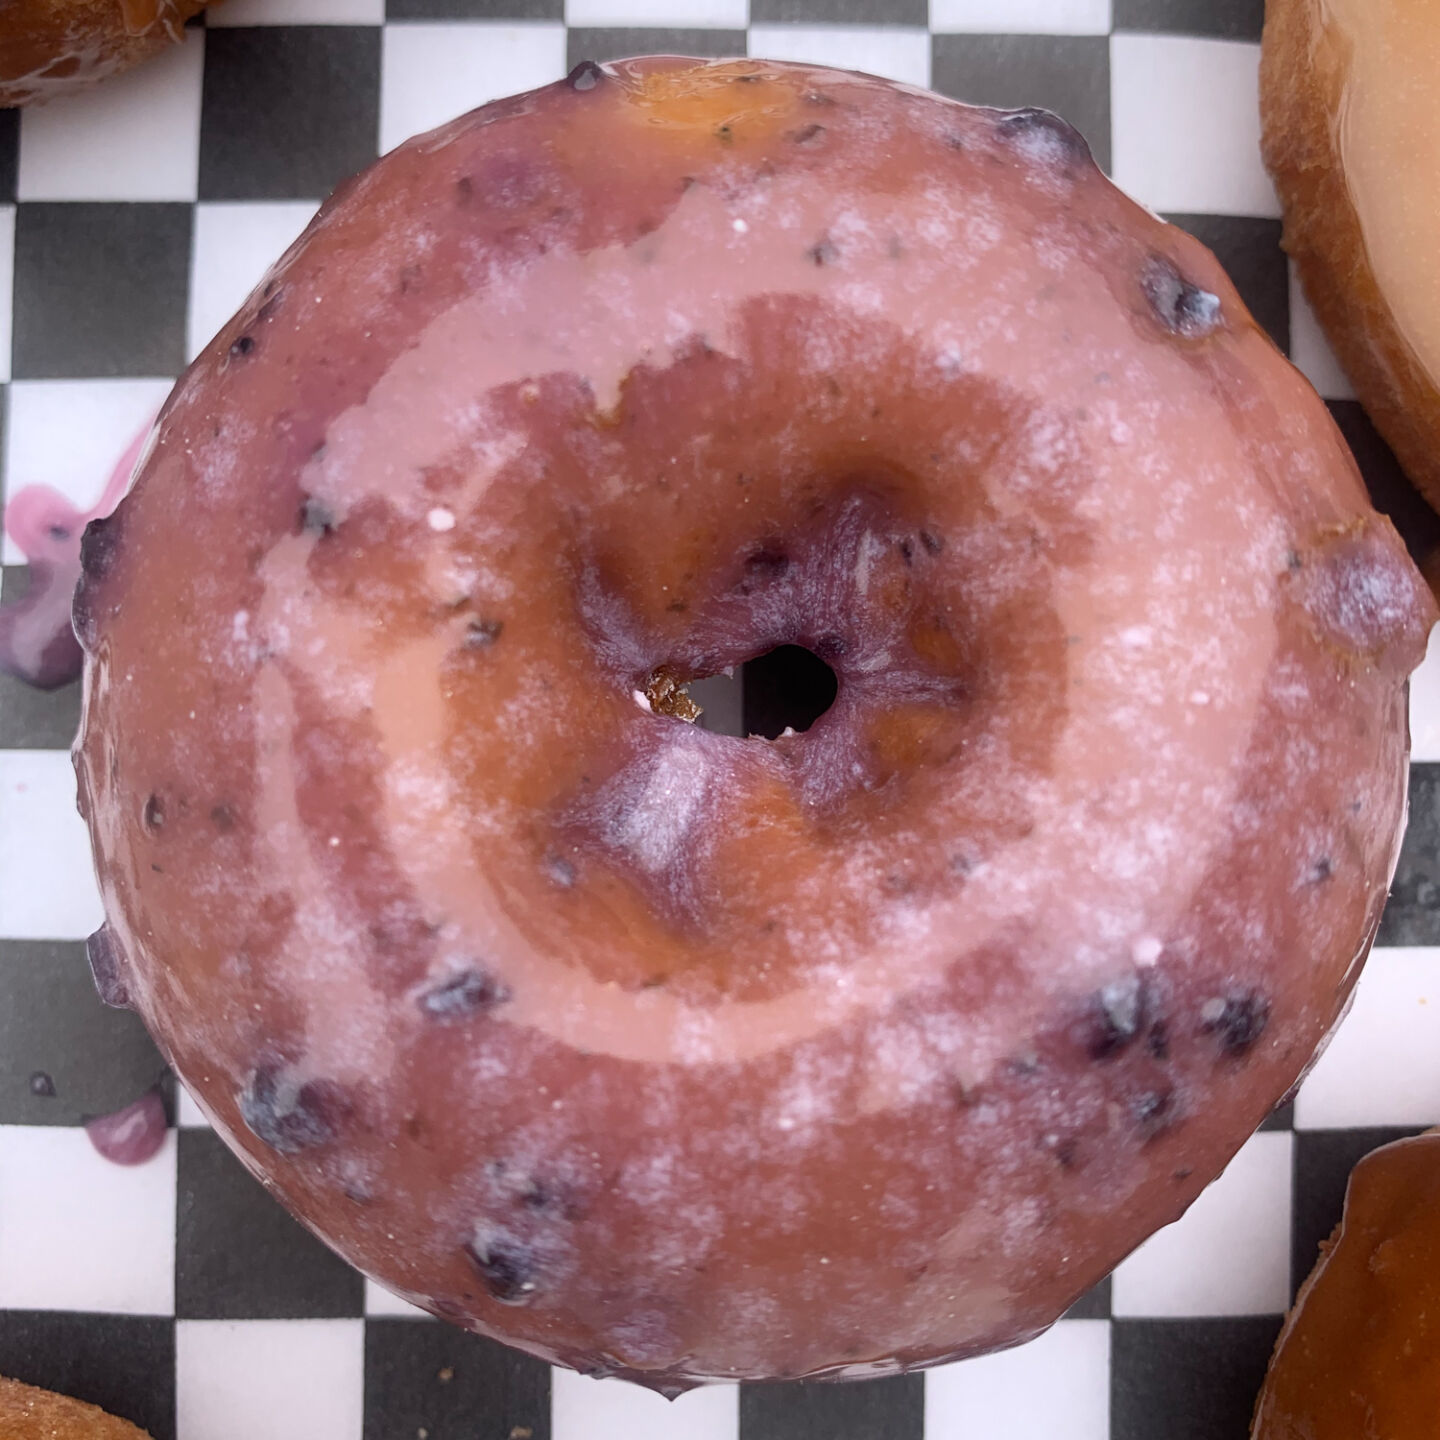 07-broad-street-dough-blueberry-donut.jpg